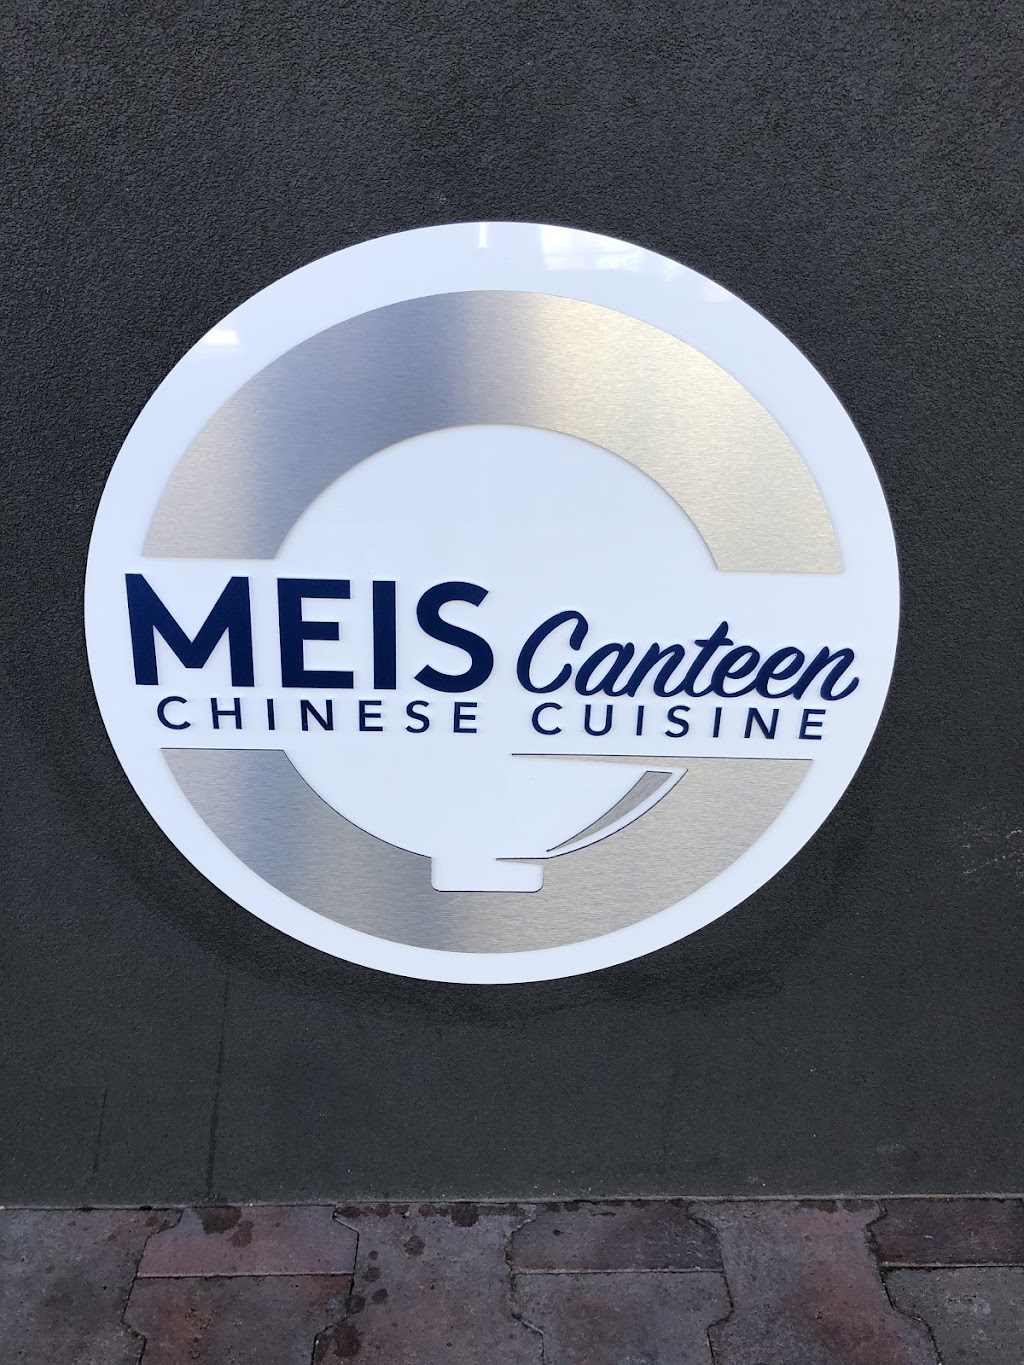 MEIS Canteen | restaurant | 2/117 Prospect Rd, Prospect SA 5082, Australia | 0451889788 OR +61 451 889 788